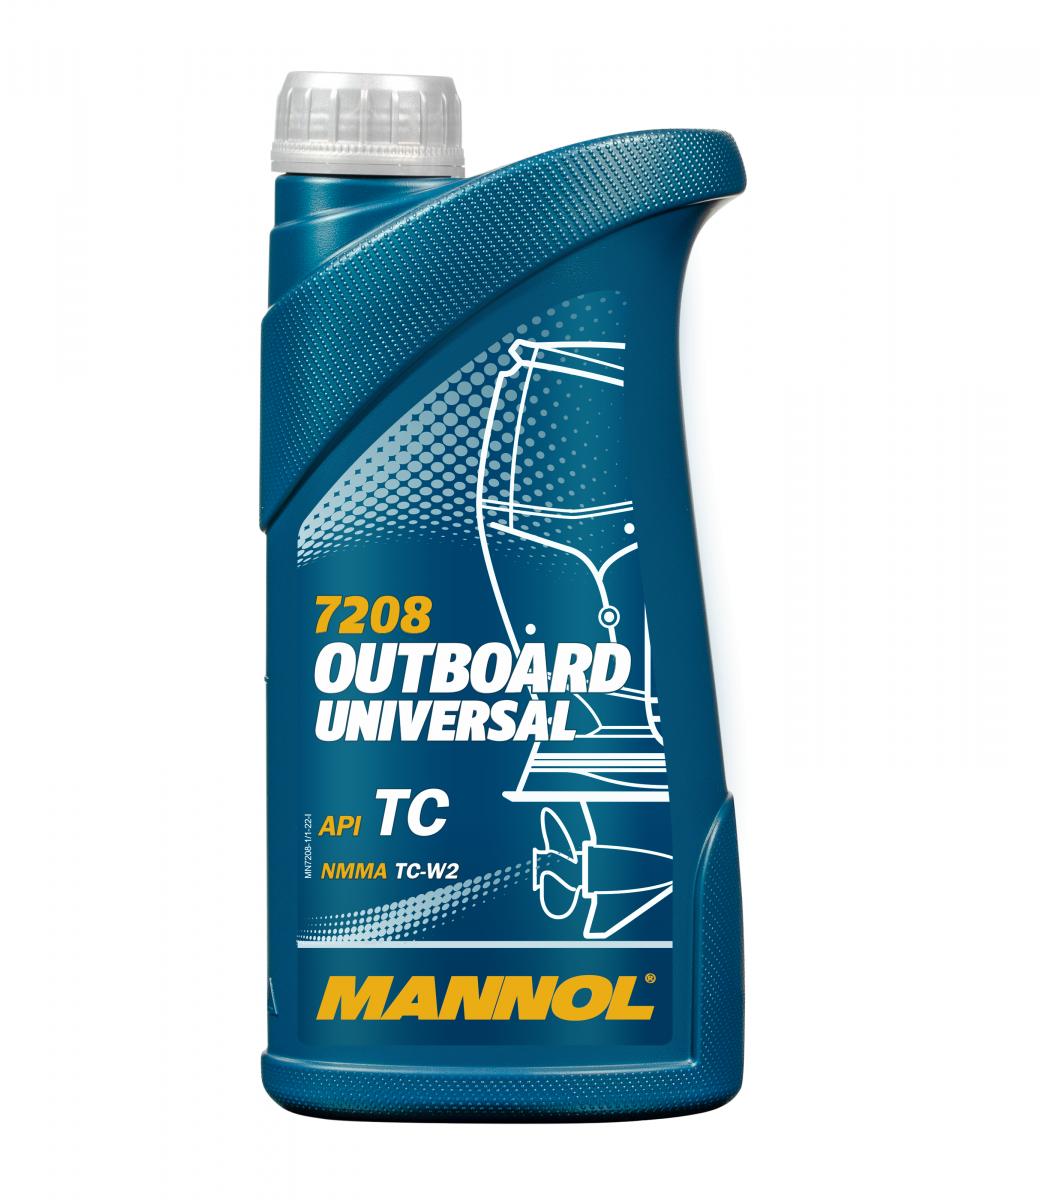 5 Liter (5x1) MANNOL Outboard Universal API TC Motoröl Außenbordmotoröl